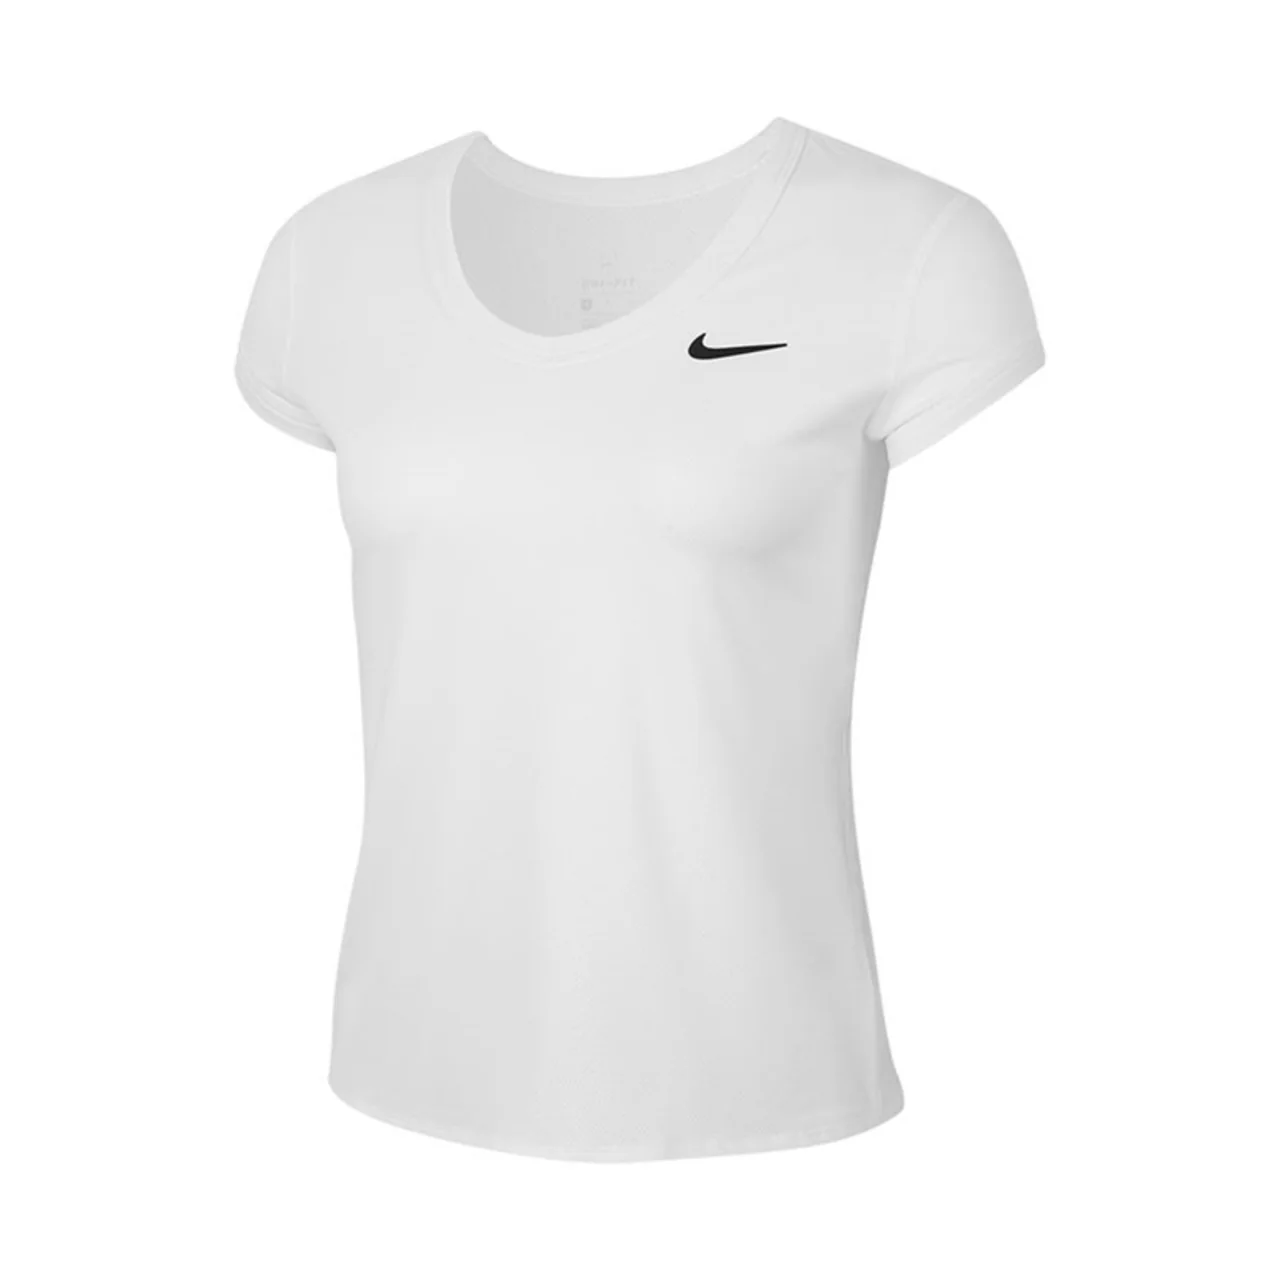 Nike Dry Court Top White